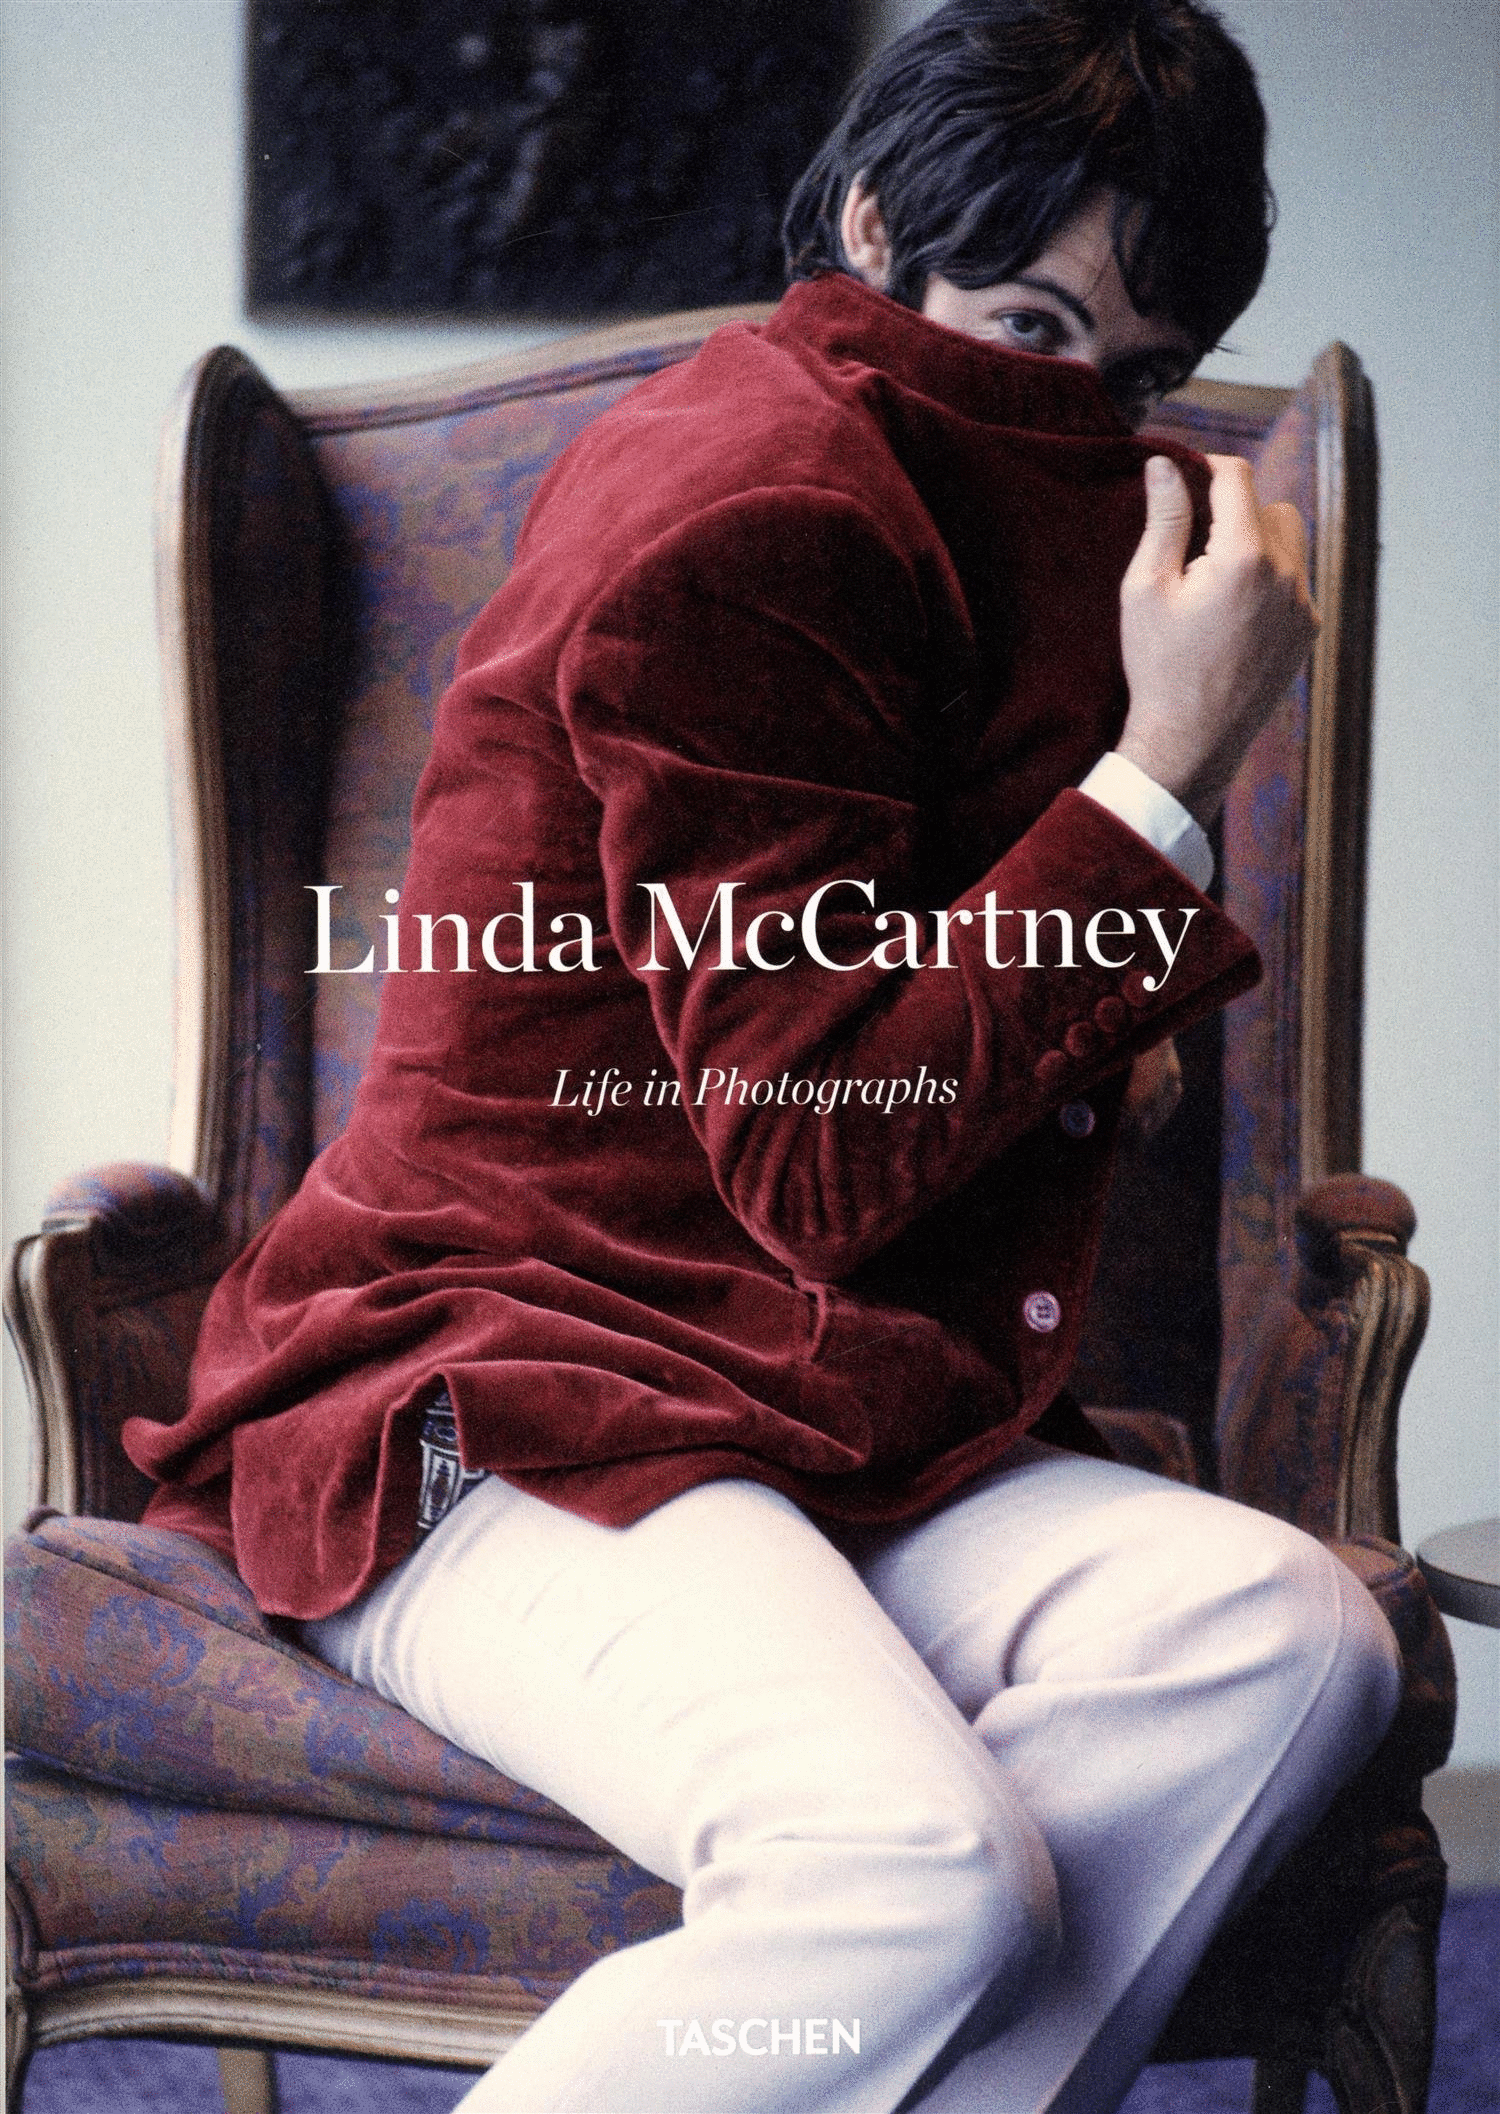 Couverture de life in photographs de Linda Mc Cartney